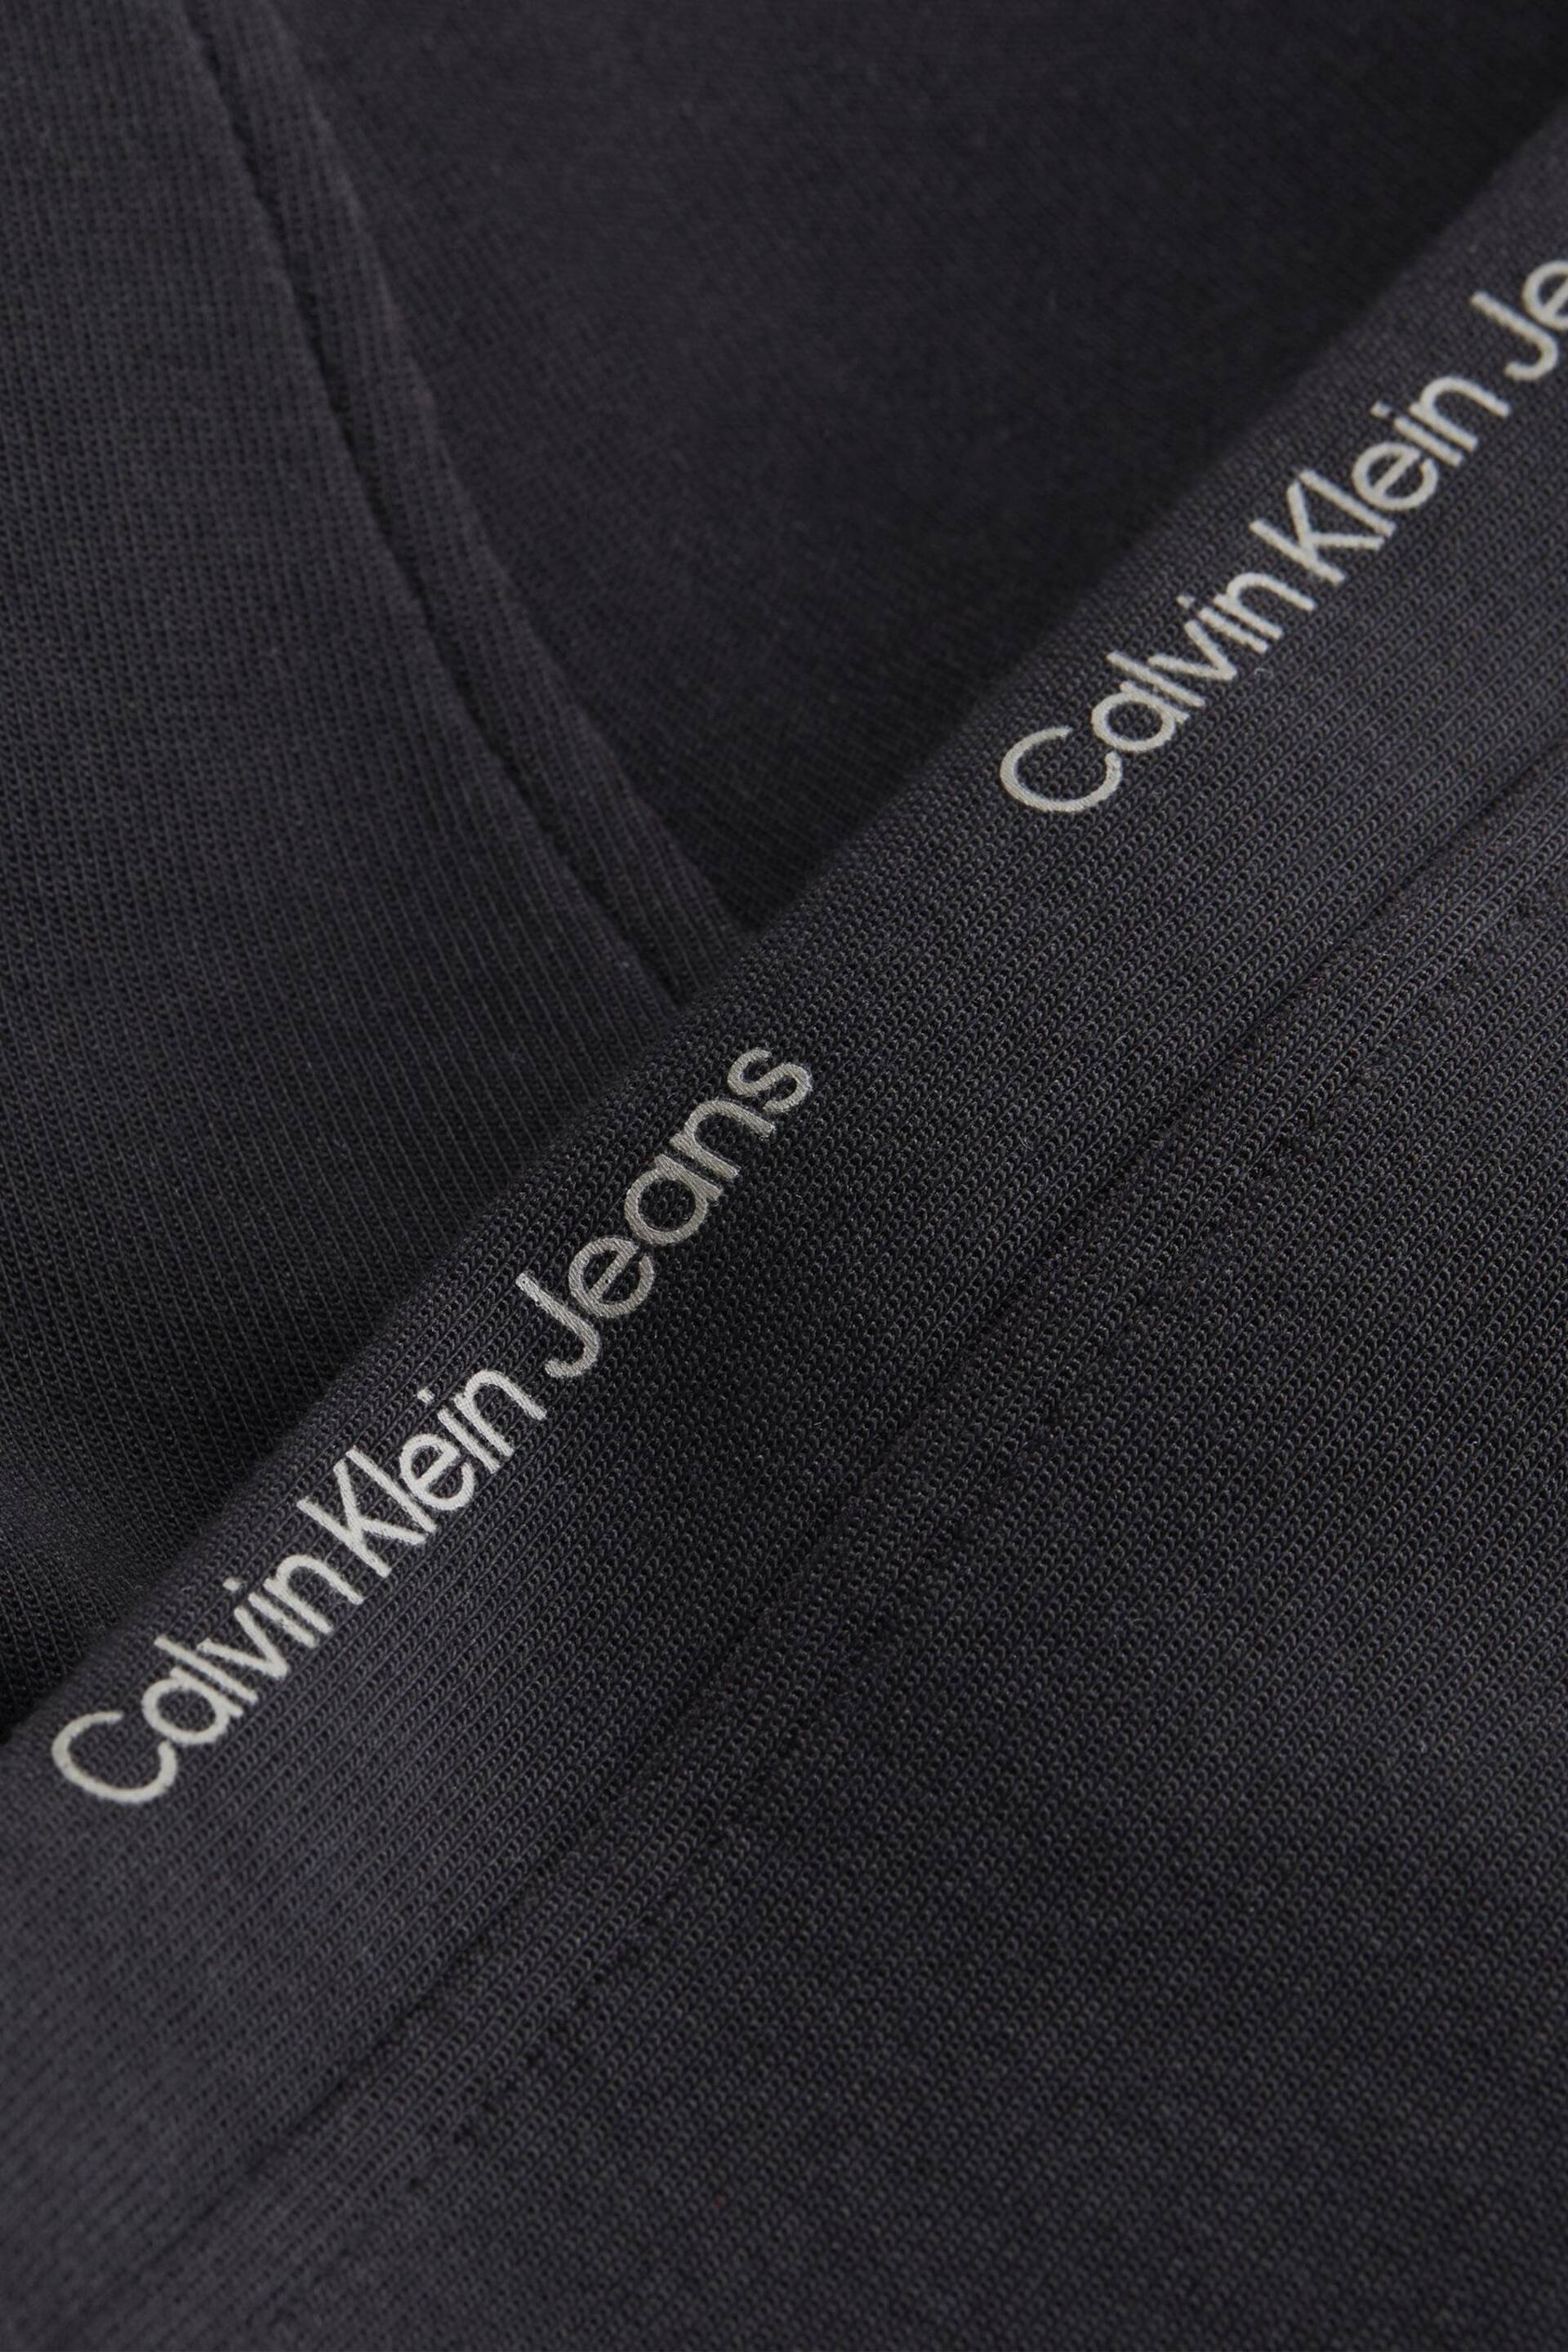 Calvin Klein Black Logo Repeat Joggers - Image 3 of 3